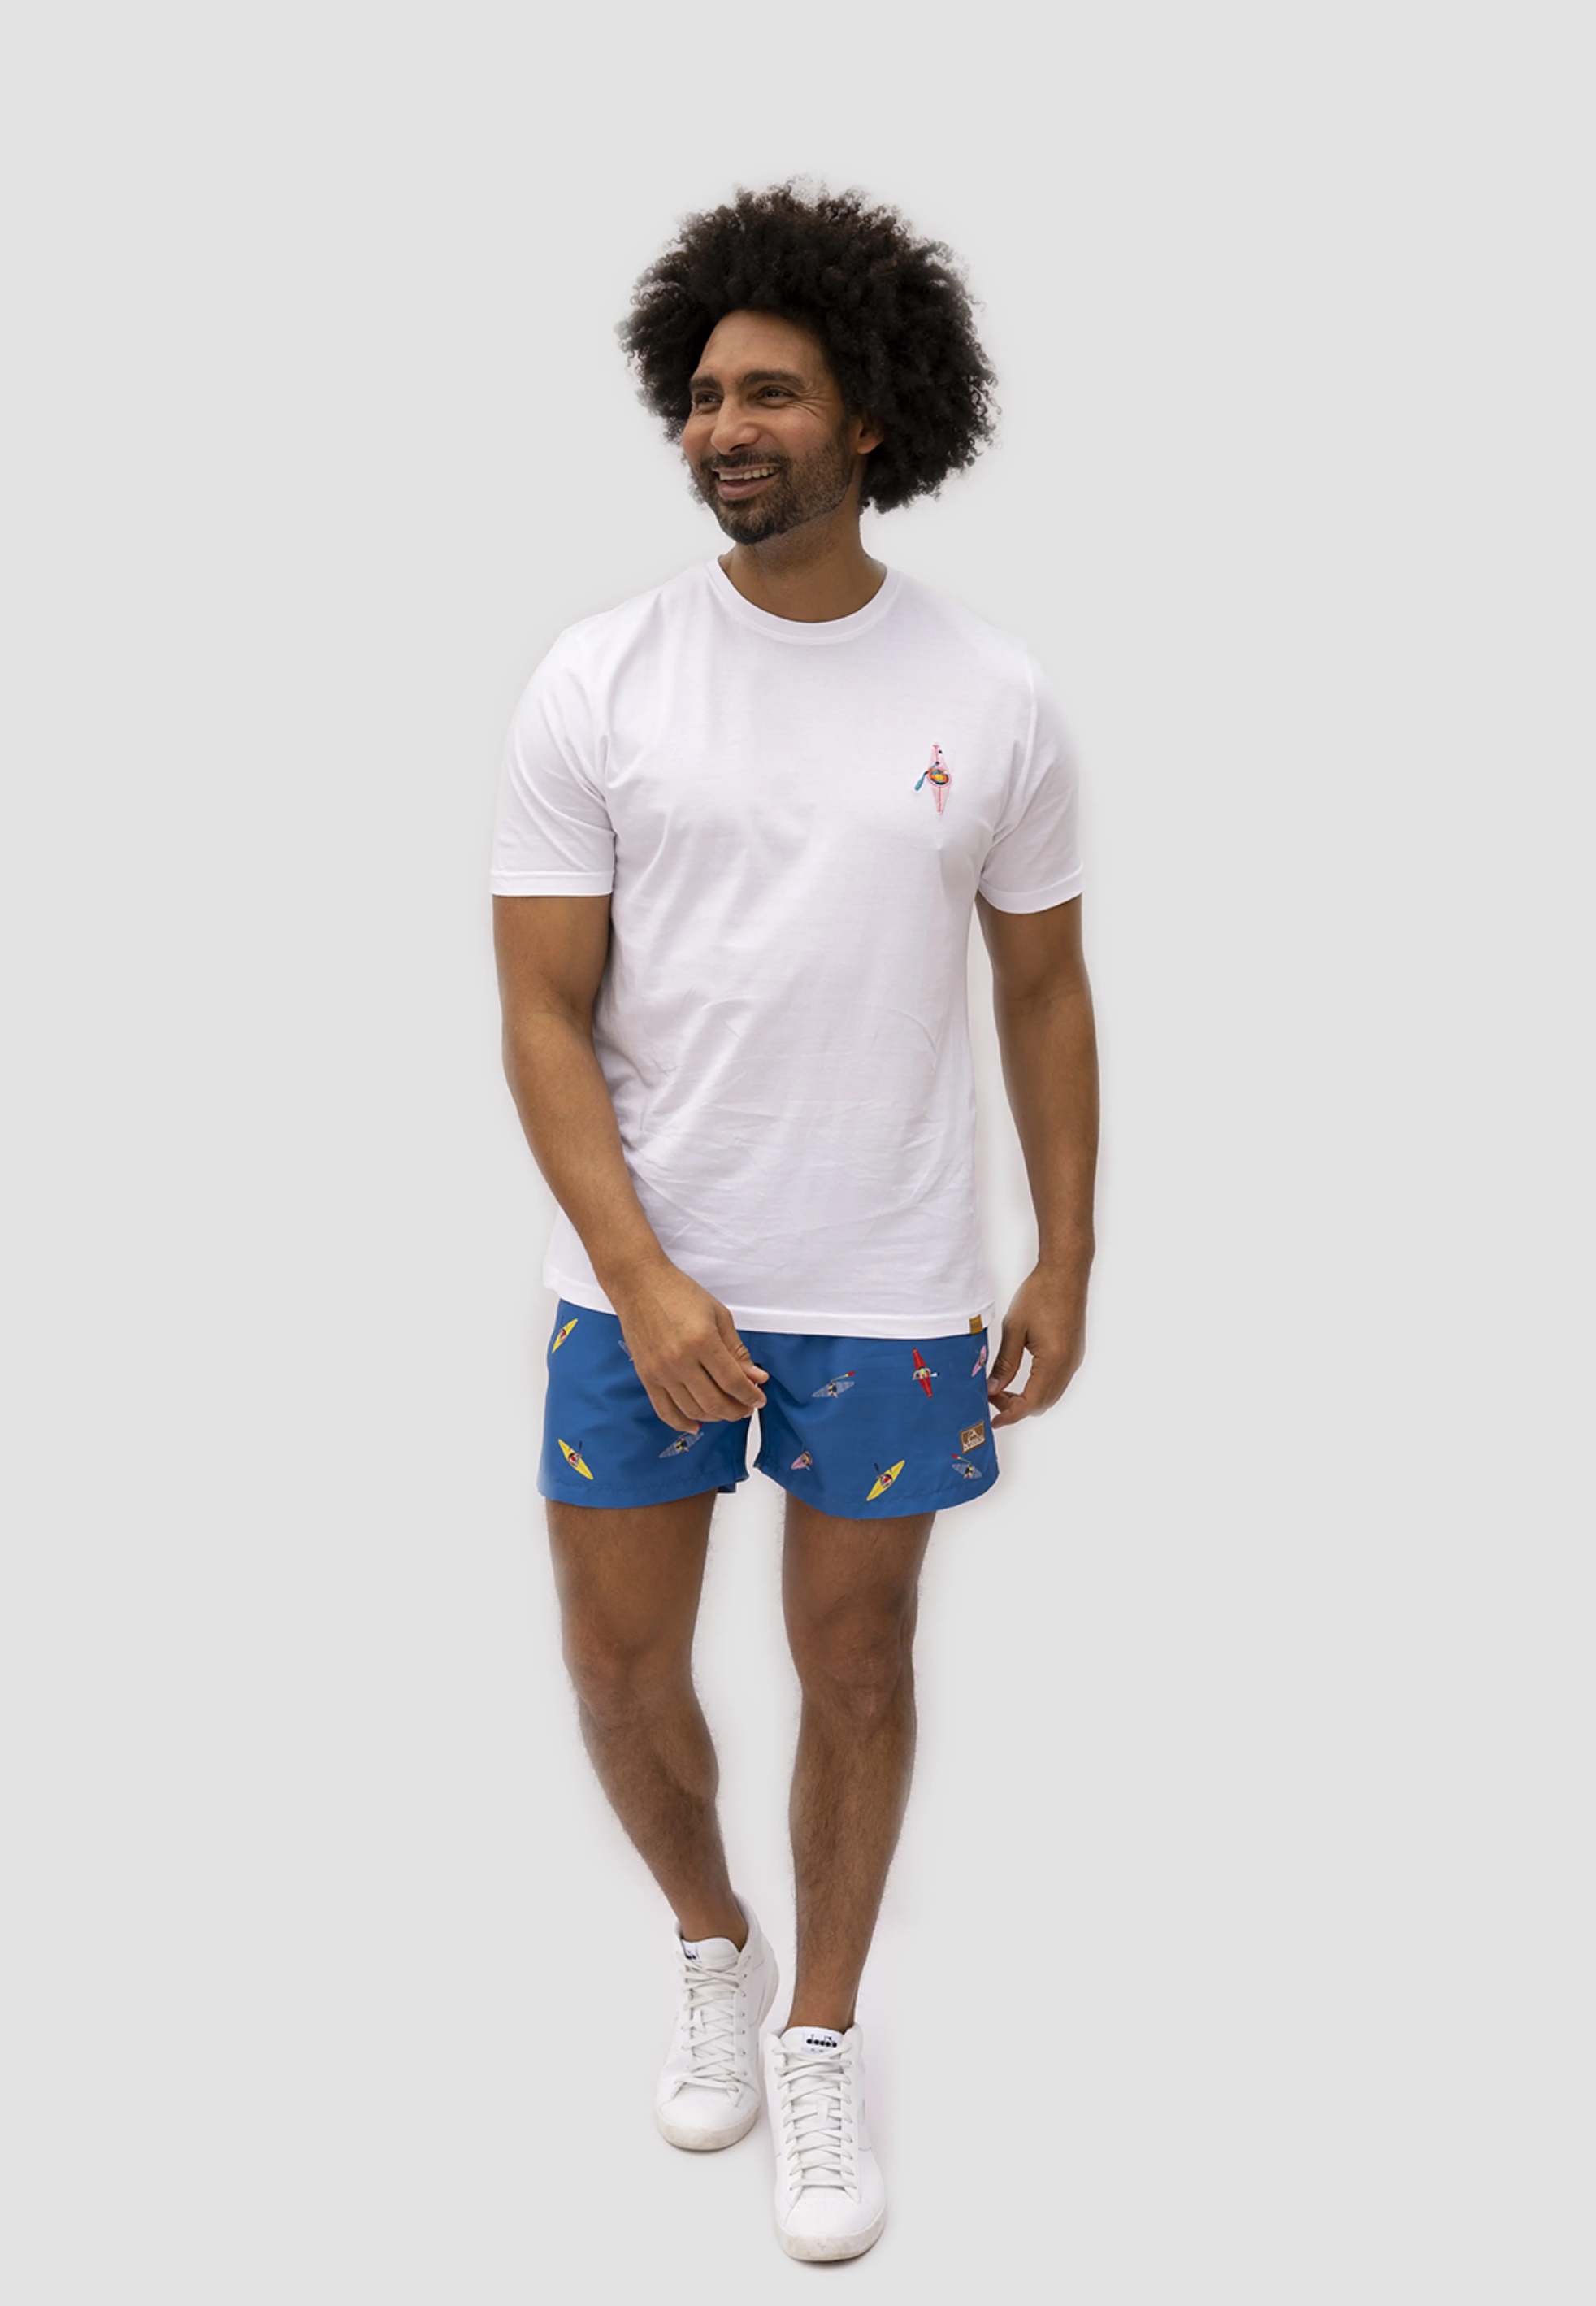 Kayak Swim Trunks & T-shirt Bundle